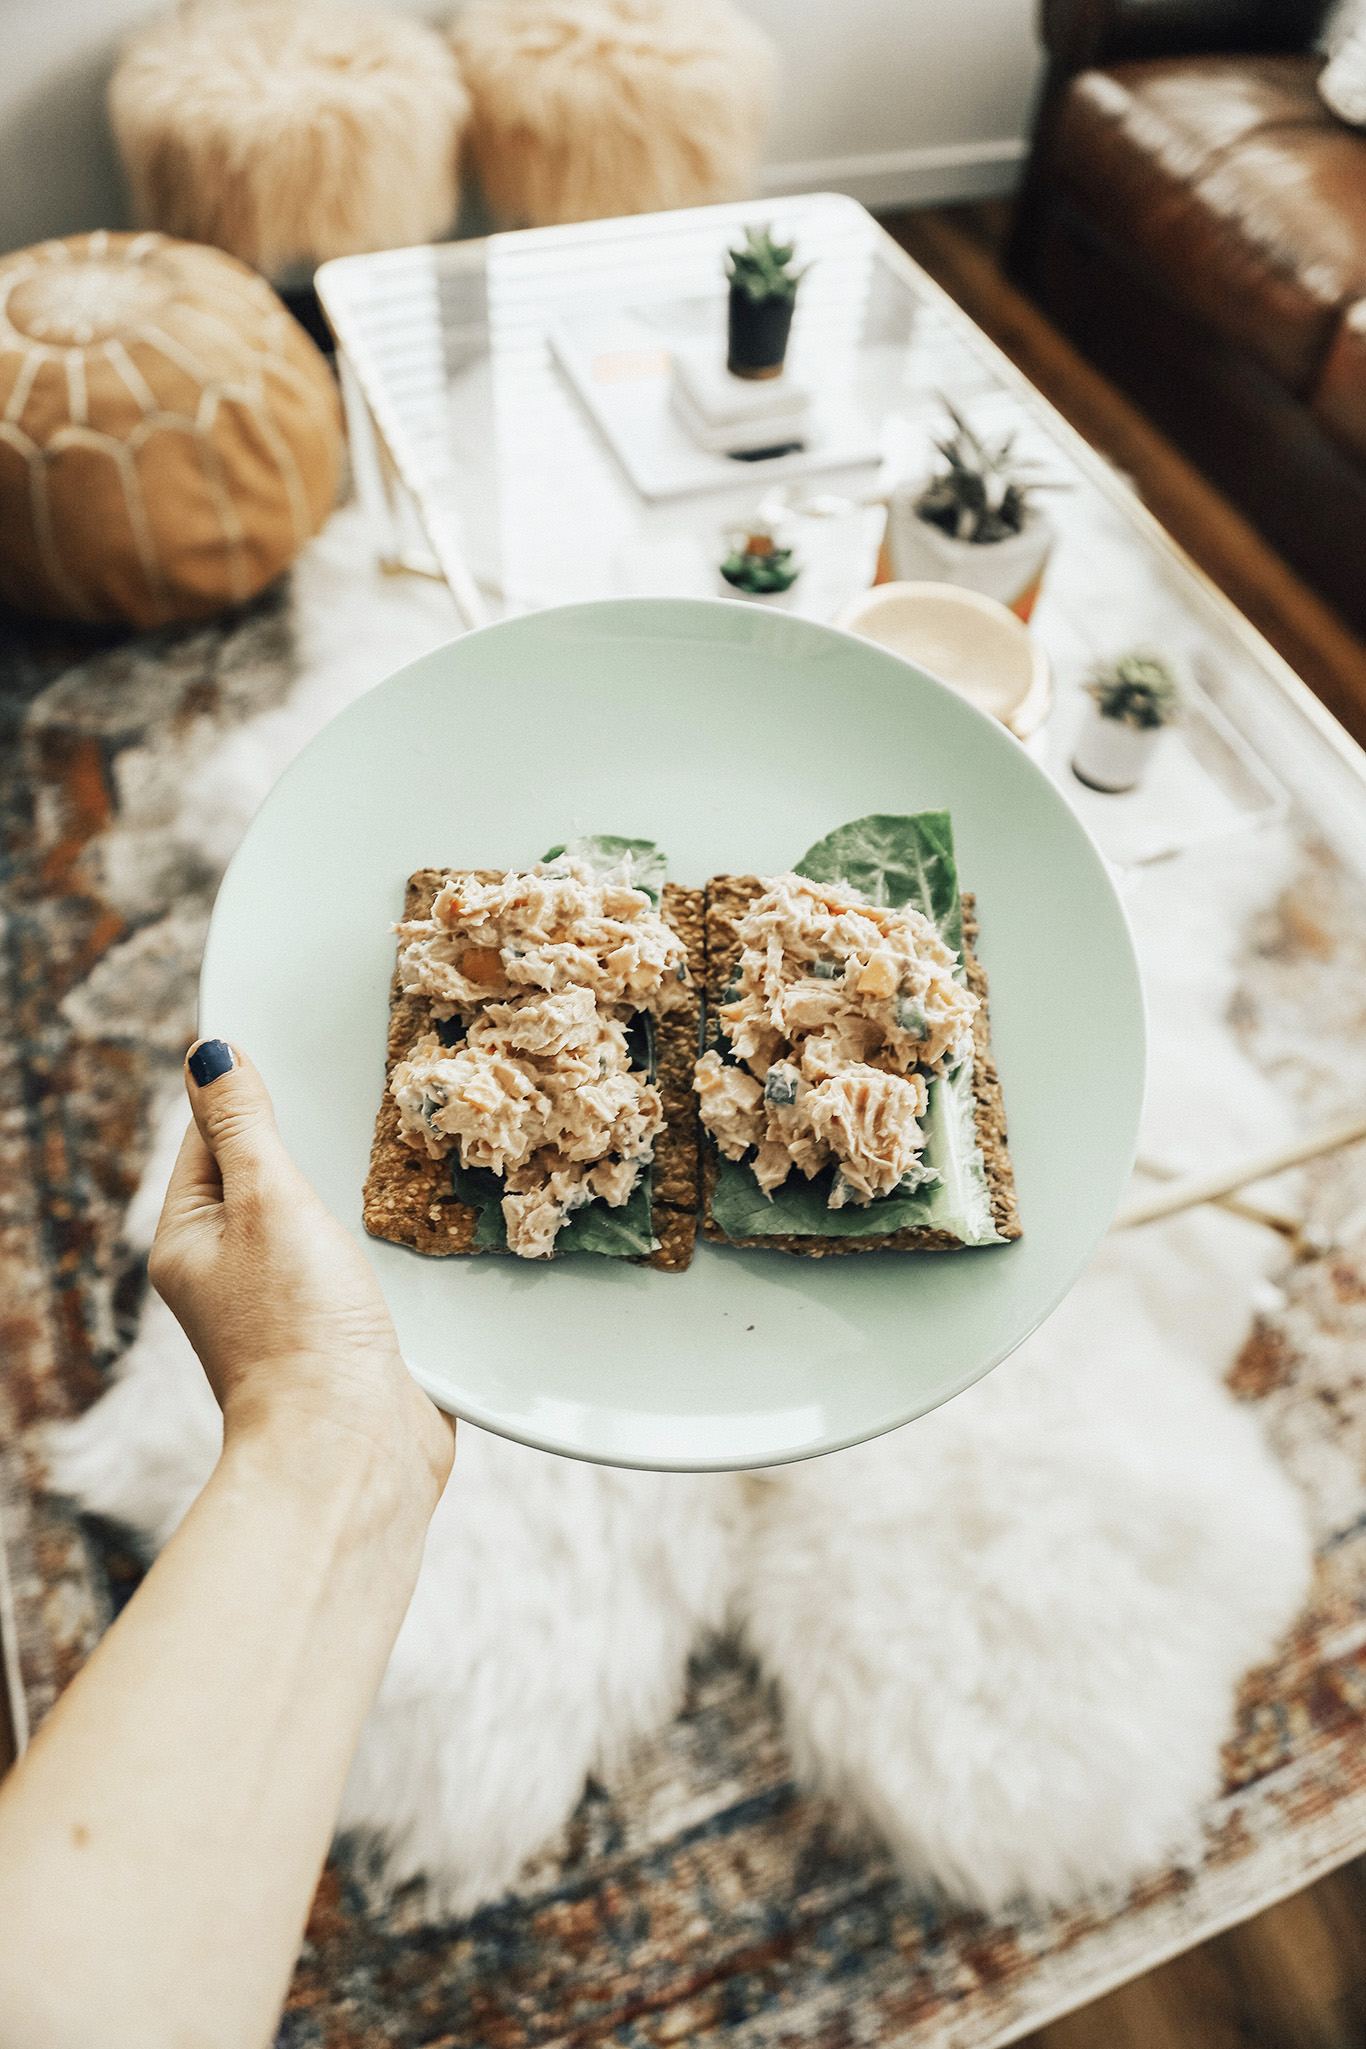 Alena Gidenko of modaprints.com shares her favorite healthy Paleo meals from home!